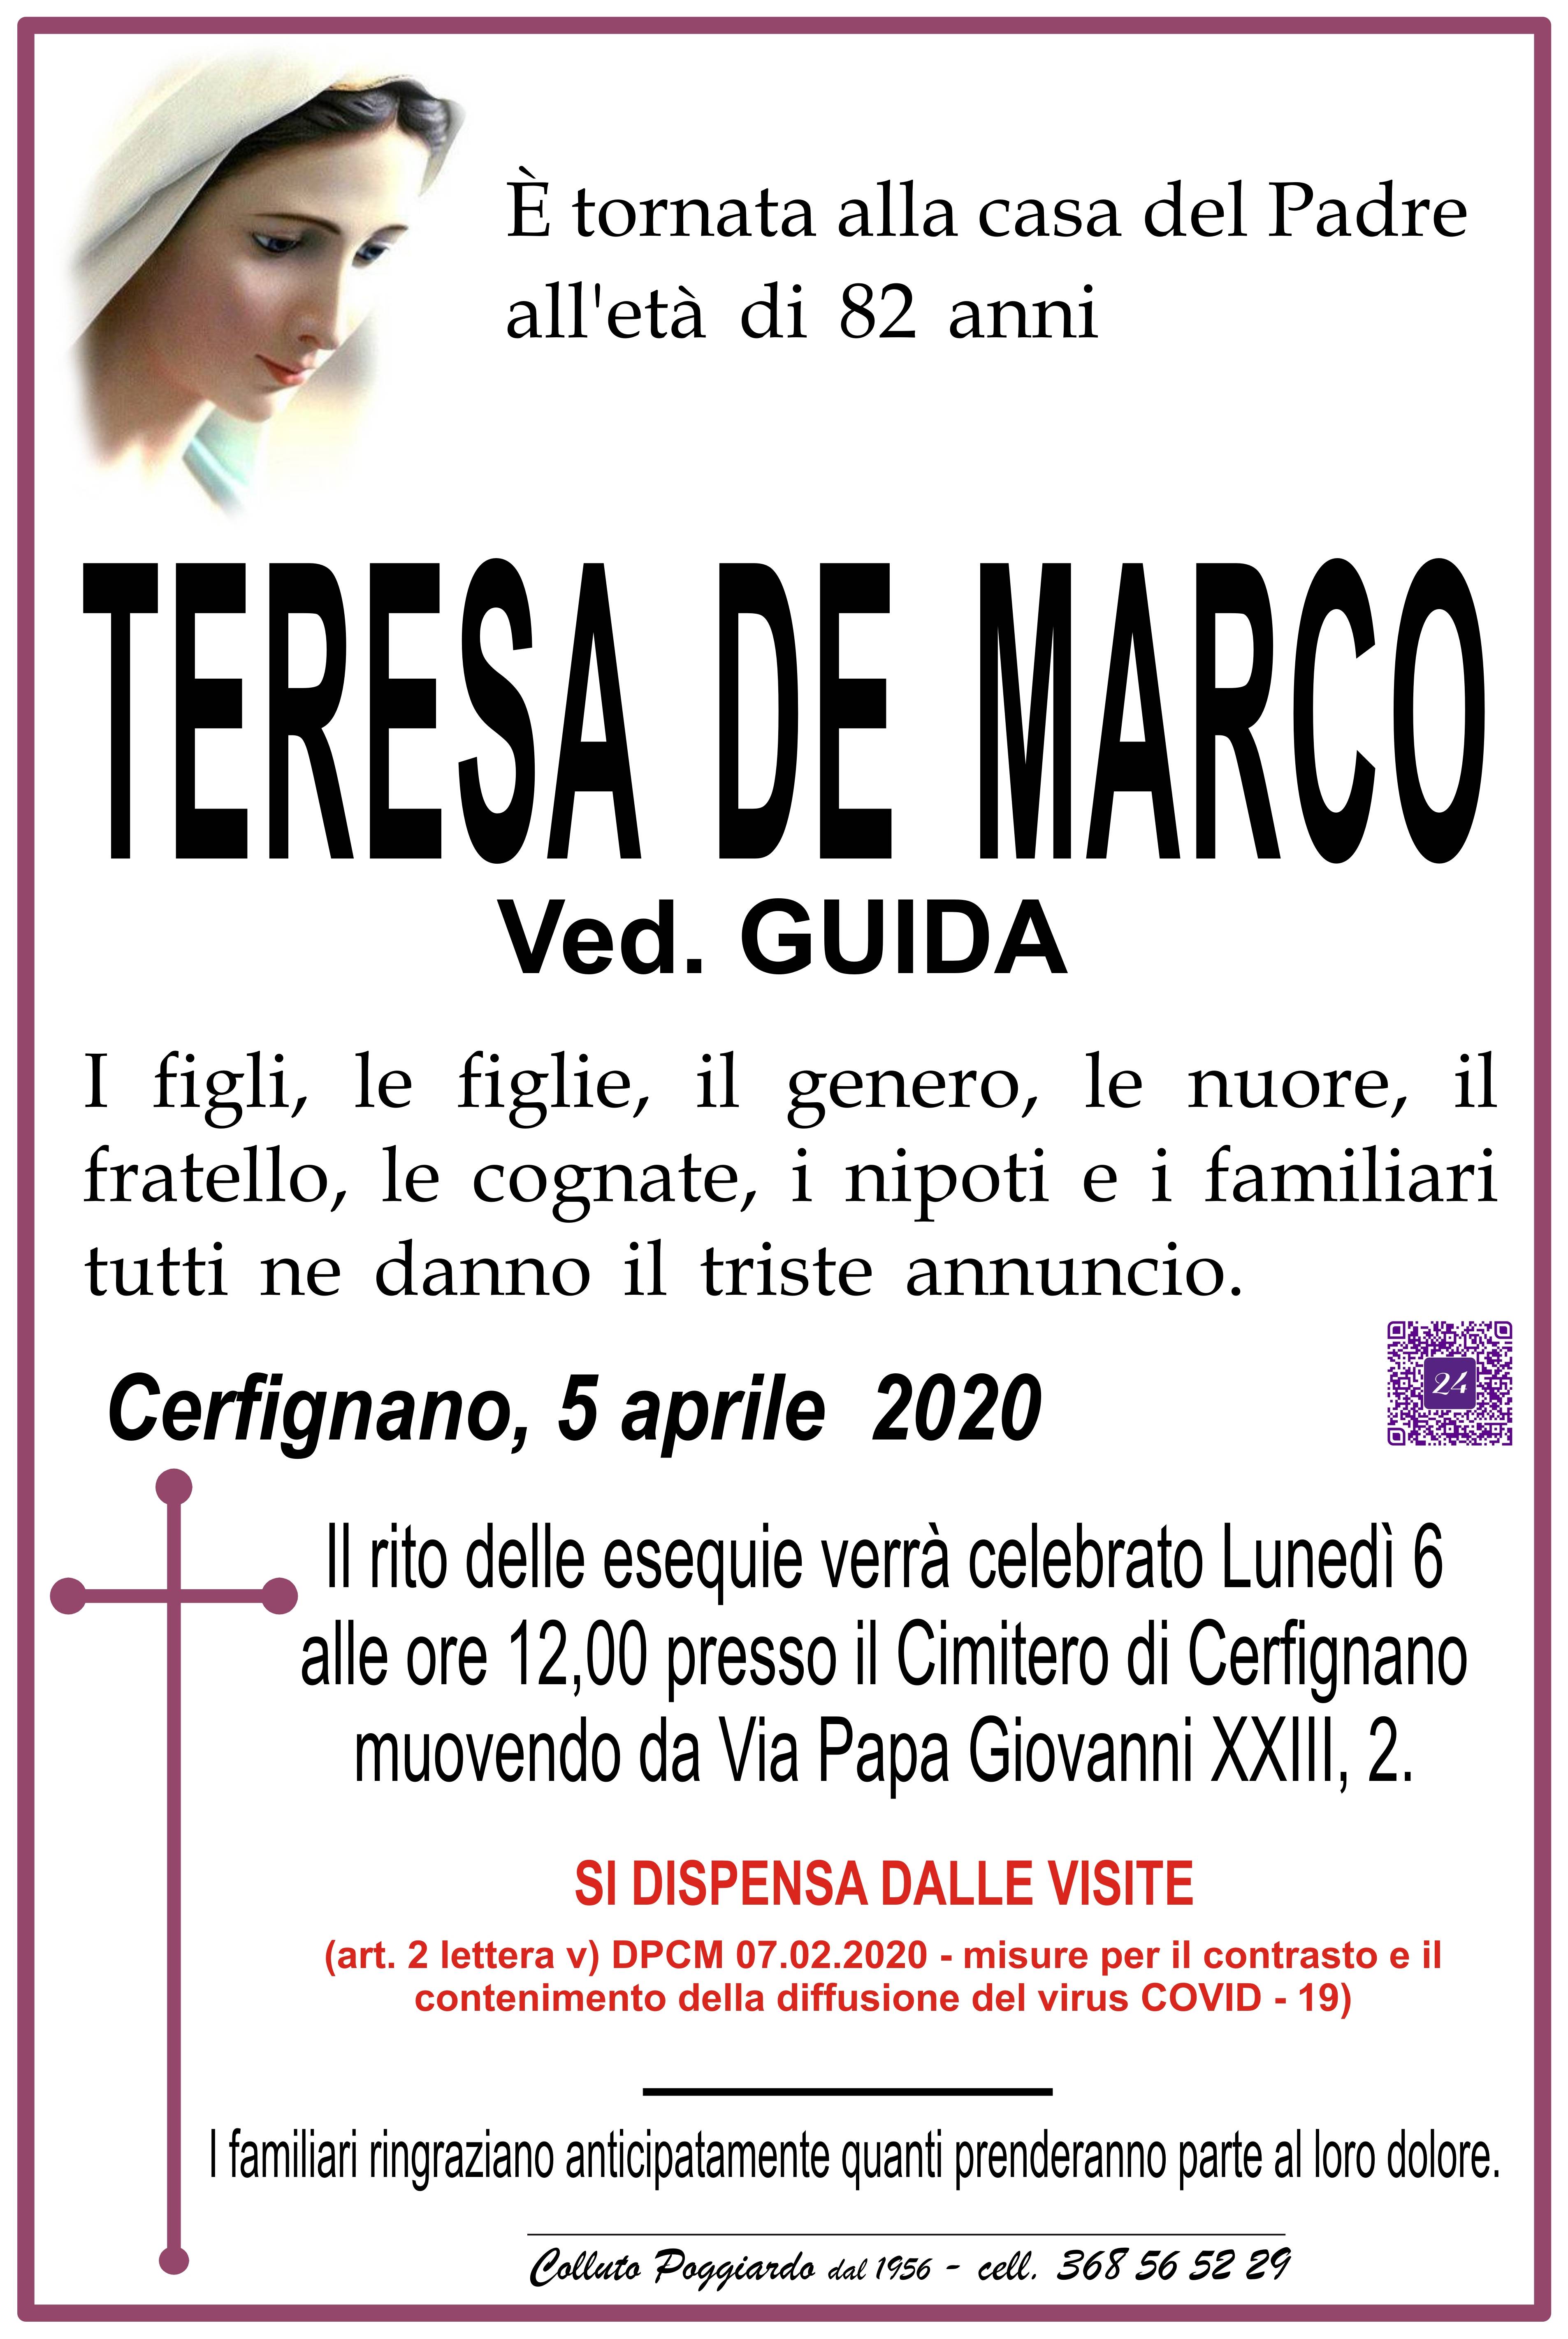 Teresa De Marco